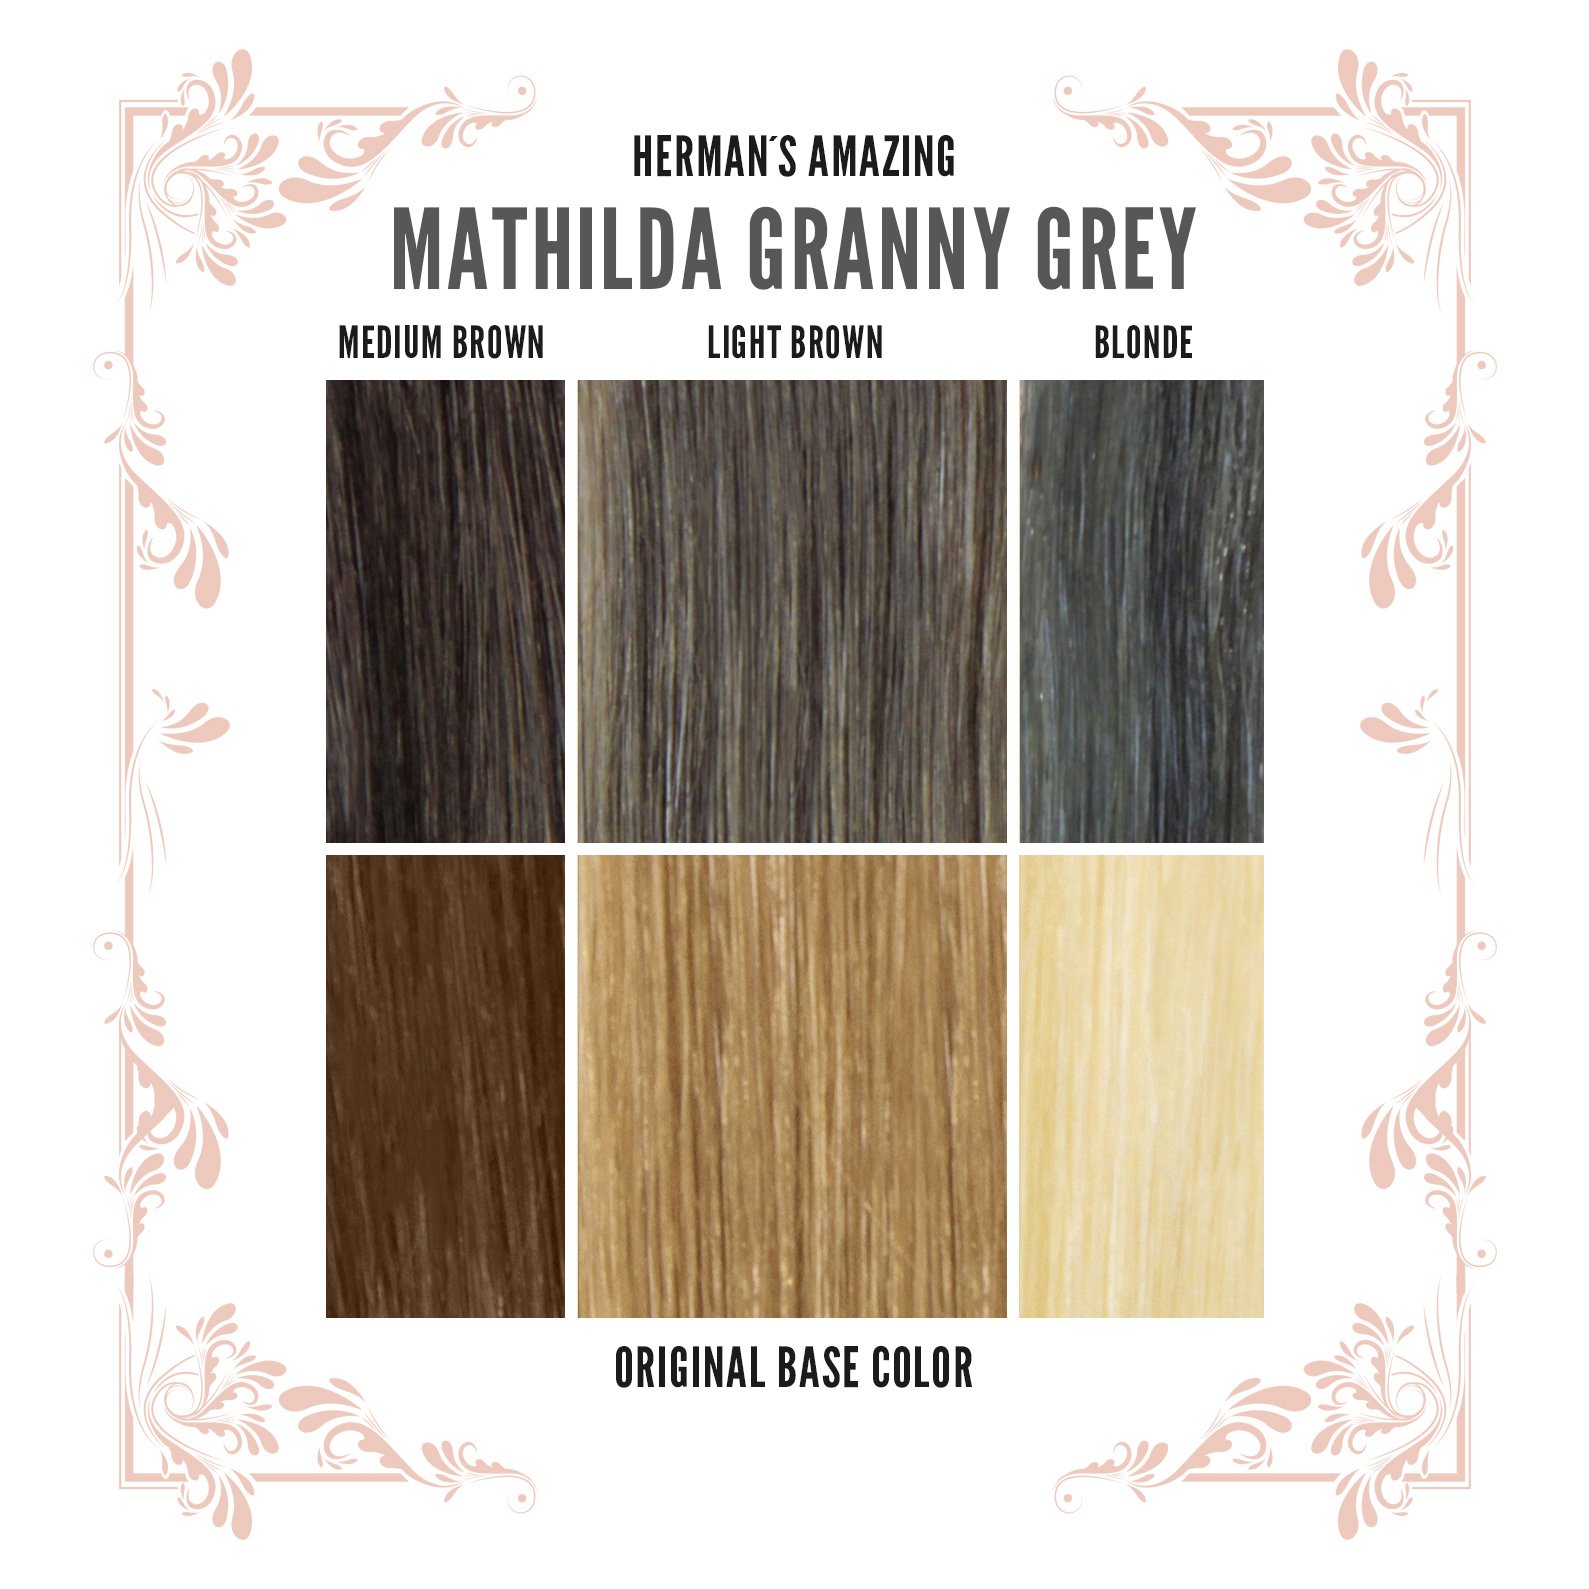 Herman's Amazing - Mathilda Granny Grey